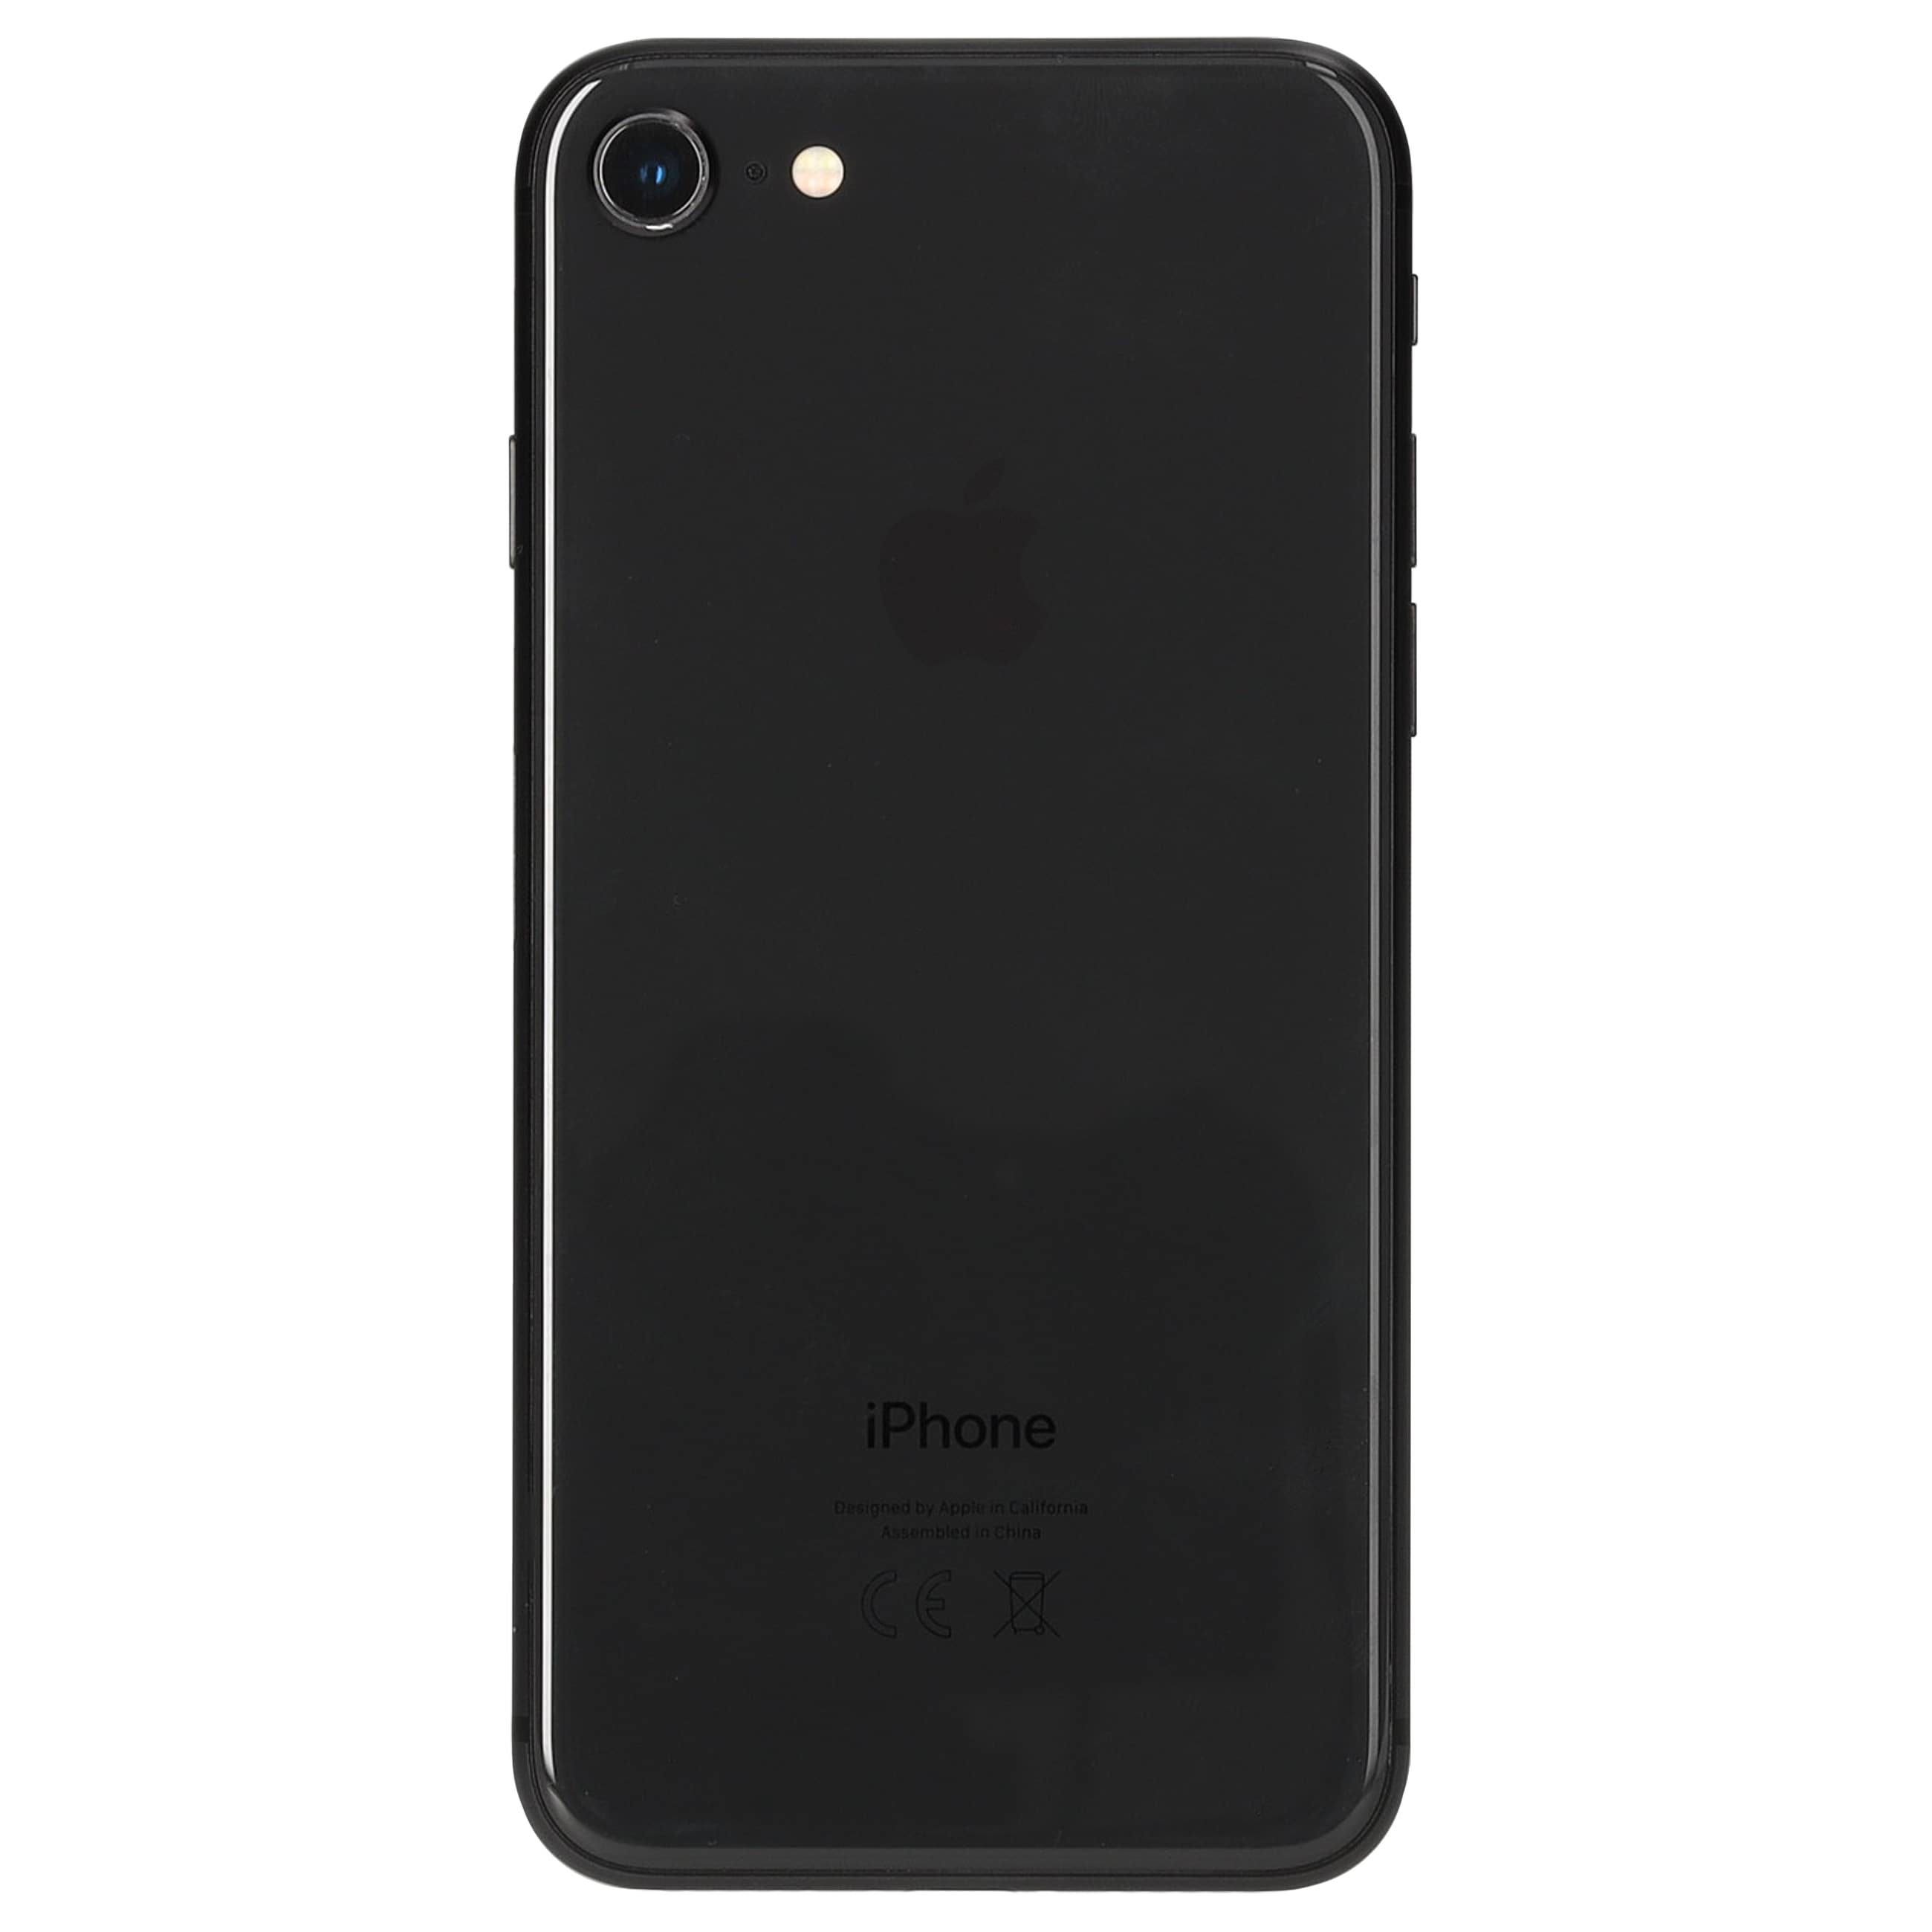 Apple iPhone 8 - 256 GB - Space Gray - Single-SIM